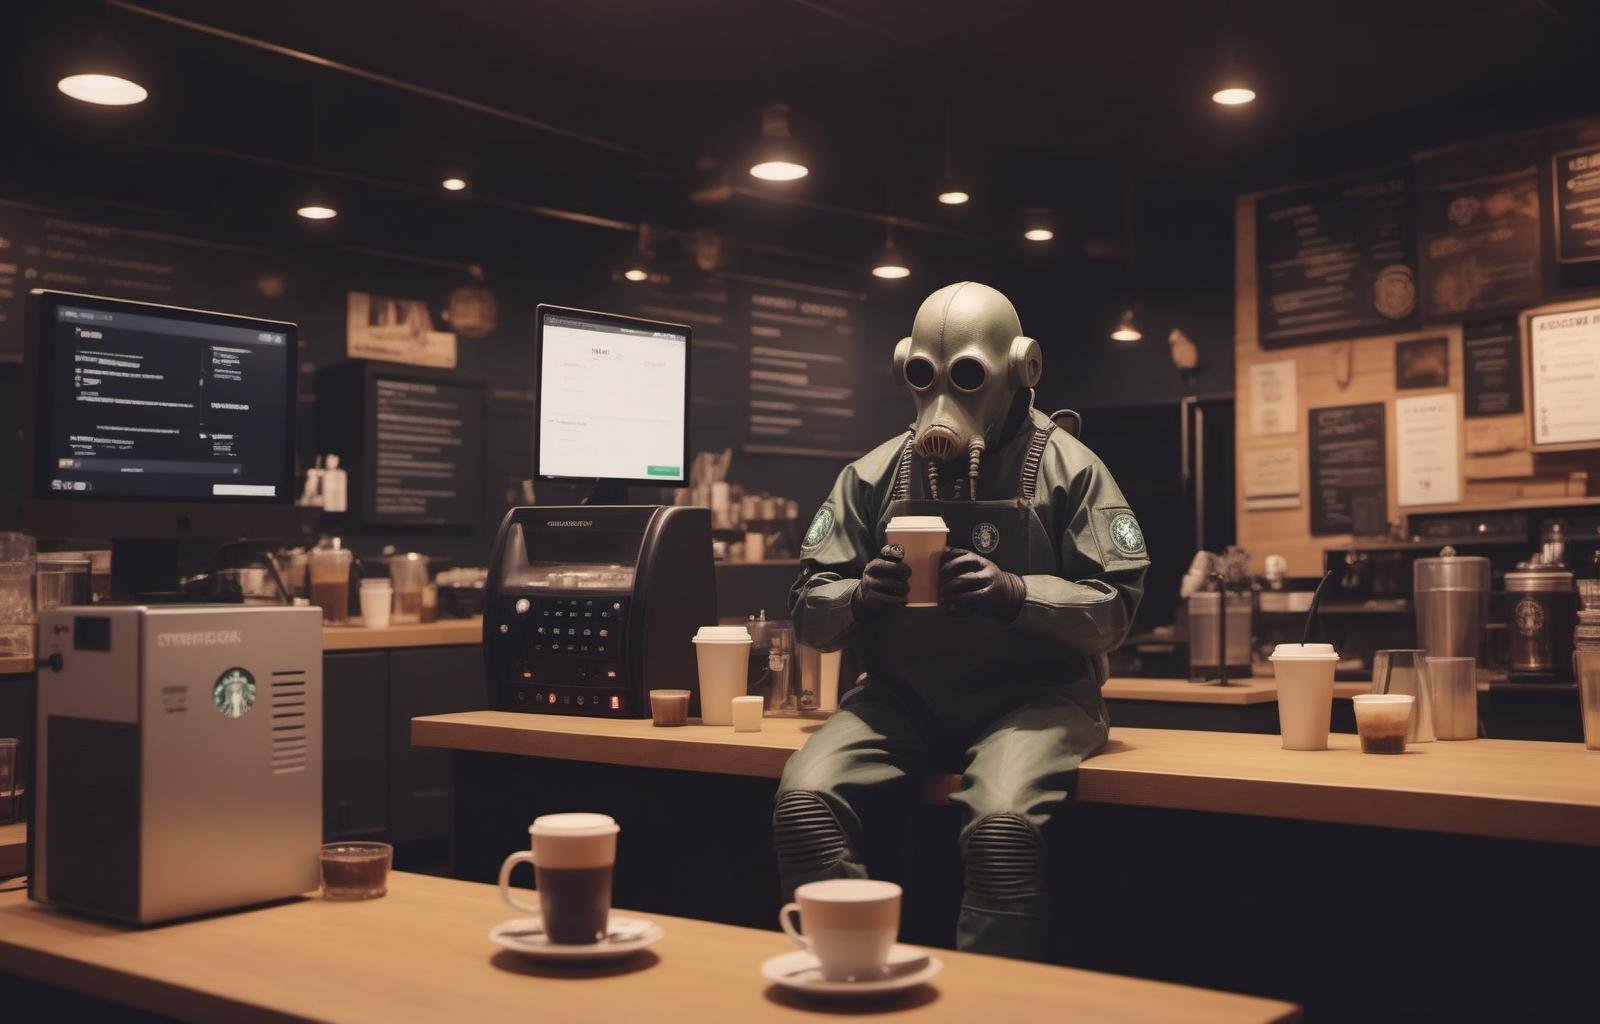 <lora:SDXL Grab-Bag-2 - Gasmask Guys - Trigger is grbtw artstyle:.8> Starbucks coffee, grbtw artstyle